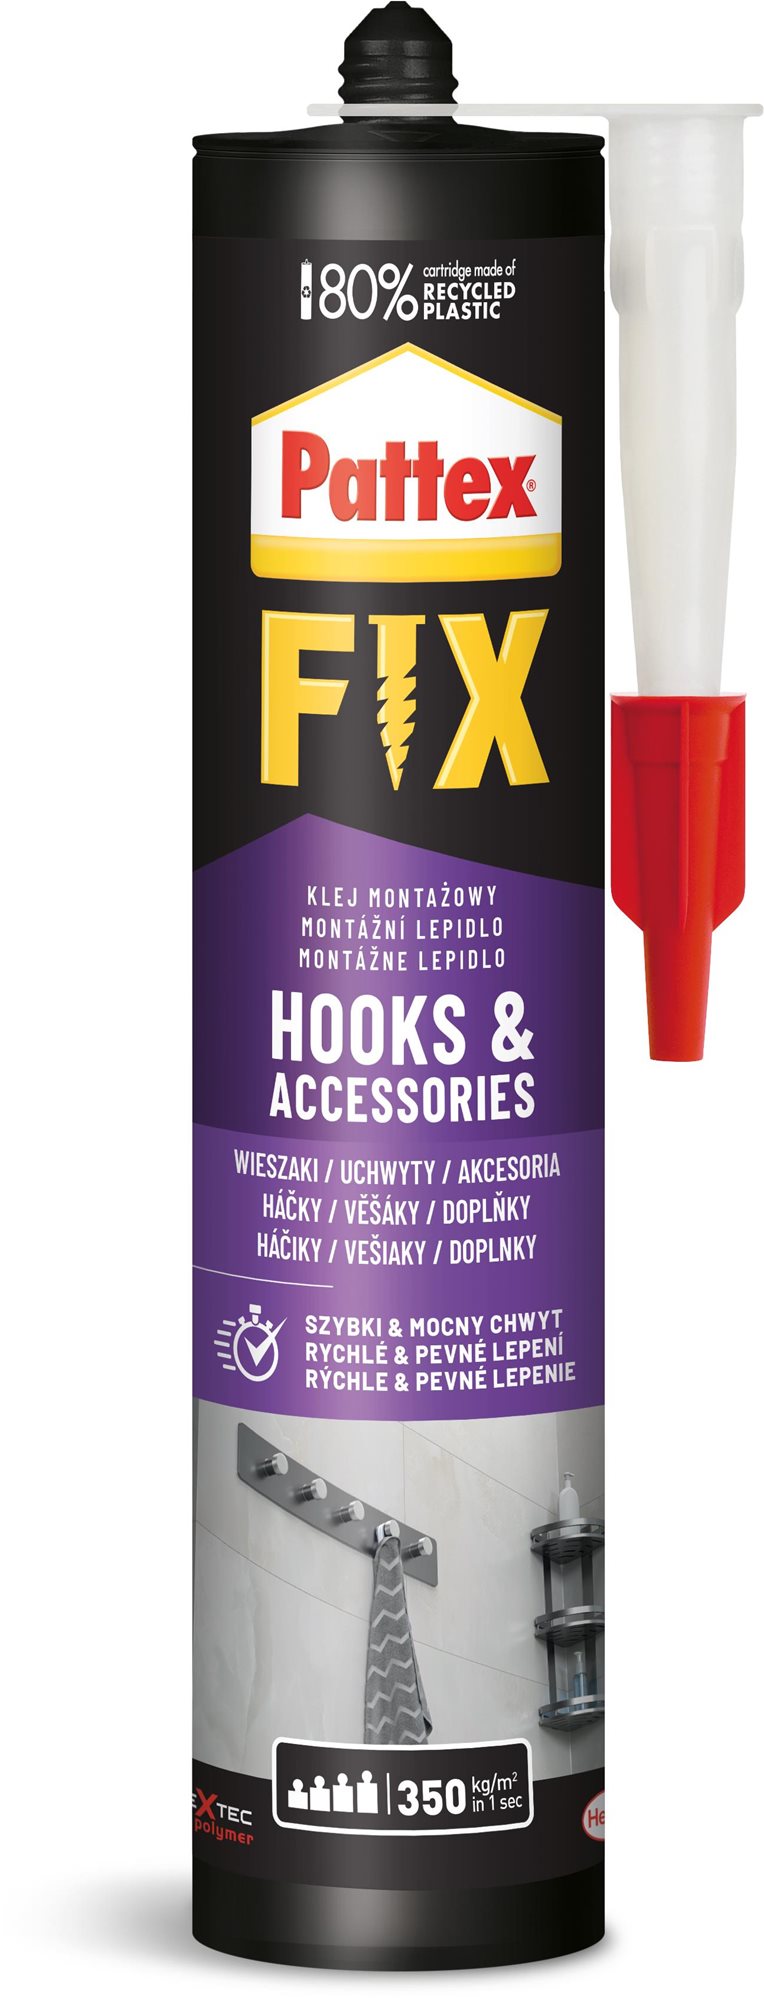 PATTEX FIX Hooks & Accessories (kampók & tartozékok) 440 g